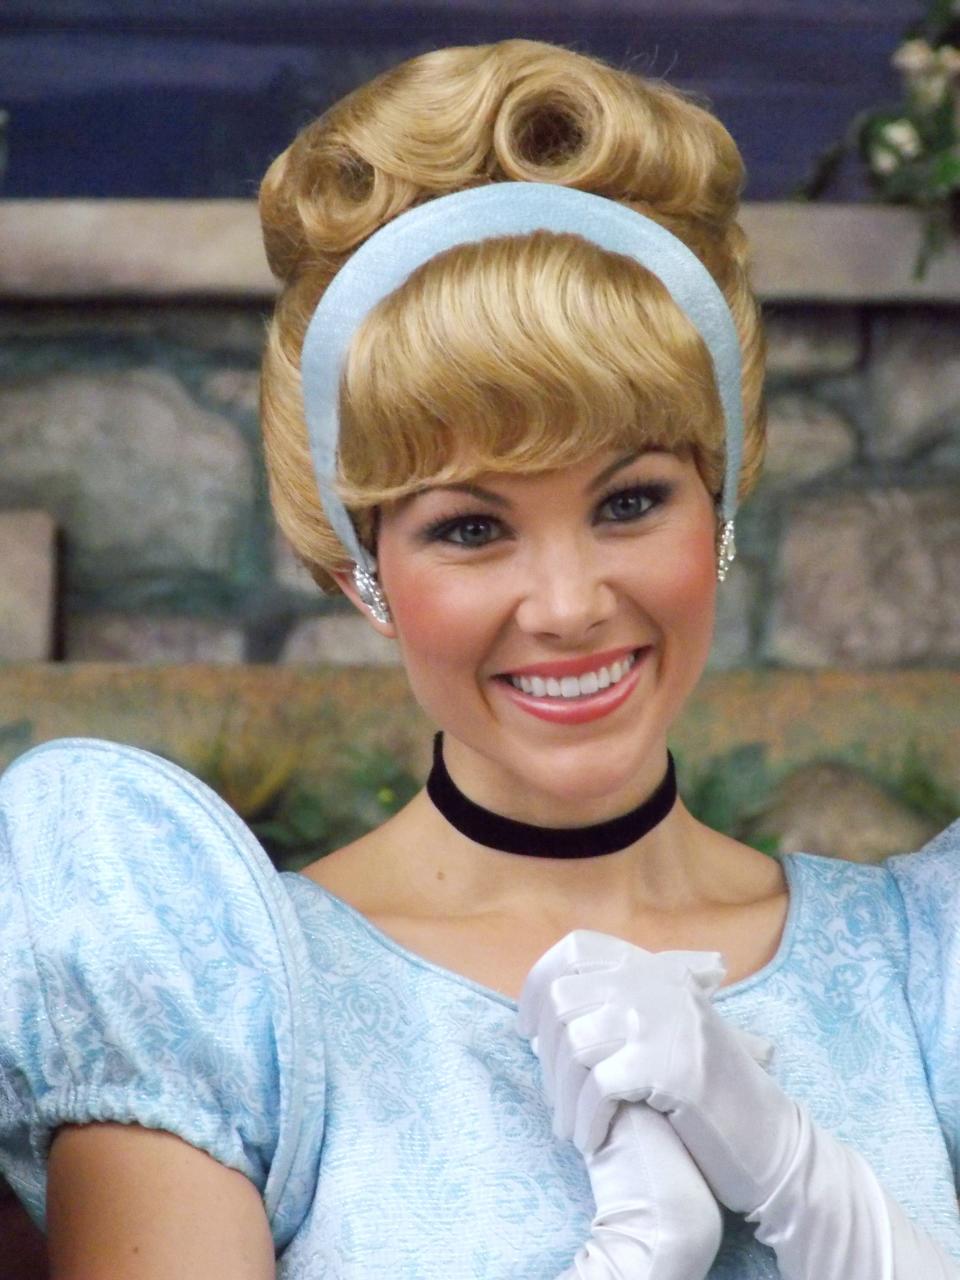 Actress portraying Cinderella at Disneyland California, July 17, 2012.